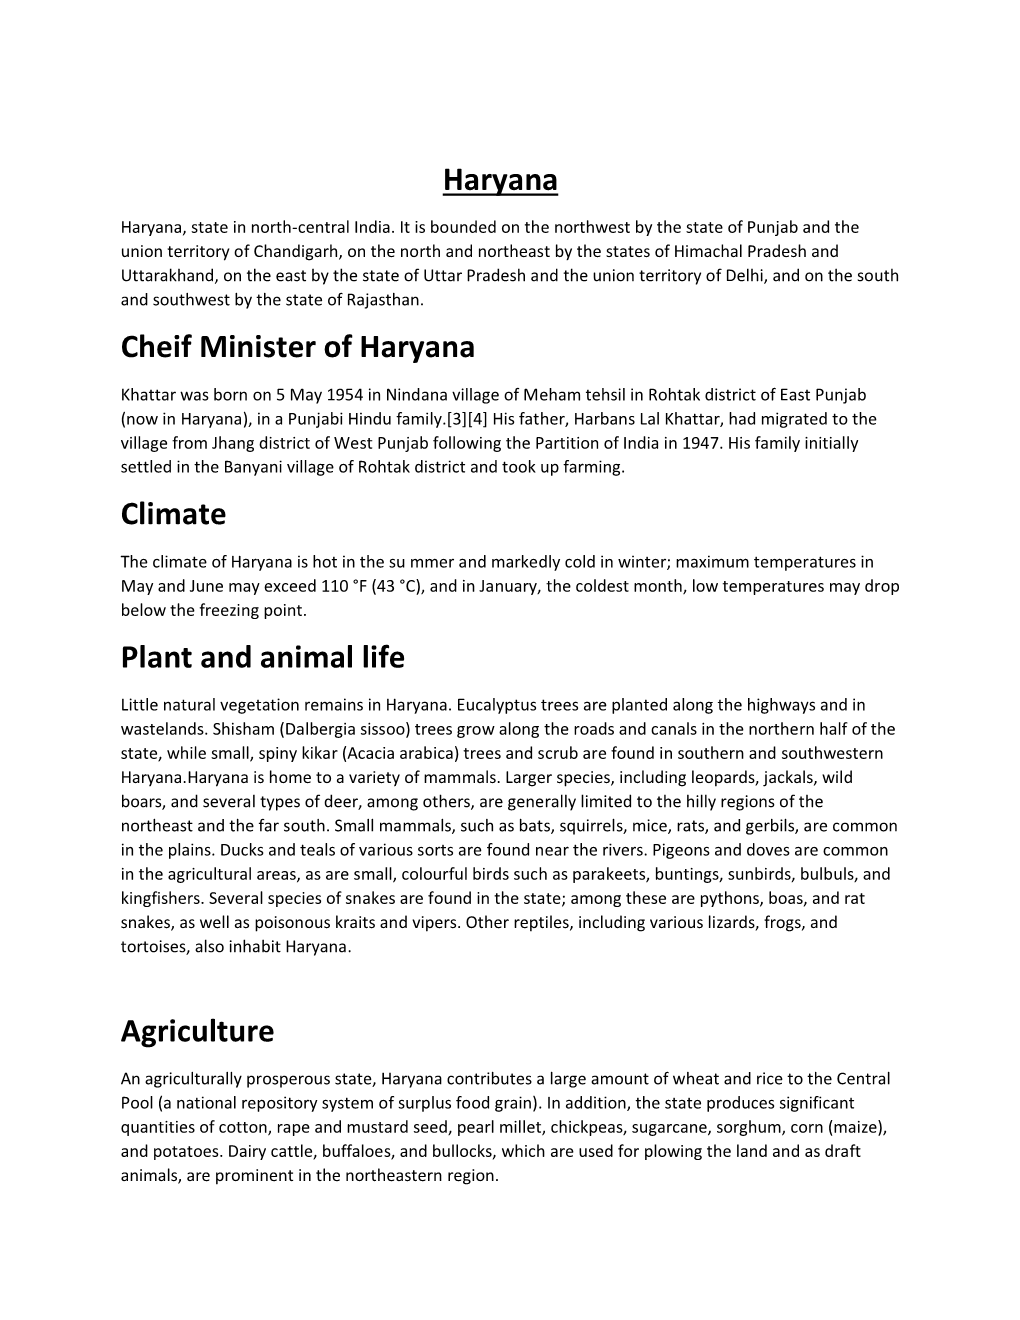 Haryana Cheif Minister of Haryana Climate Plant and Animal Life